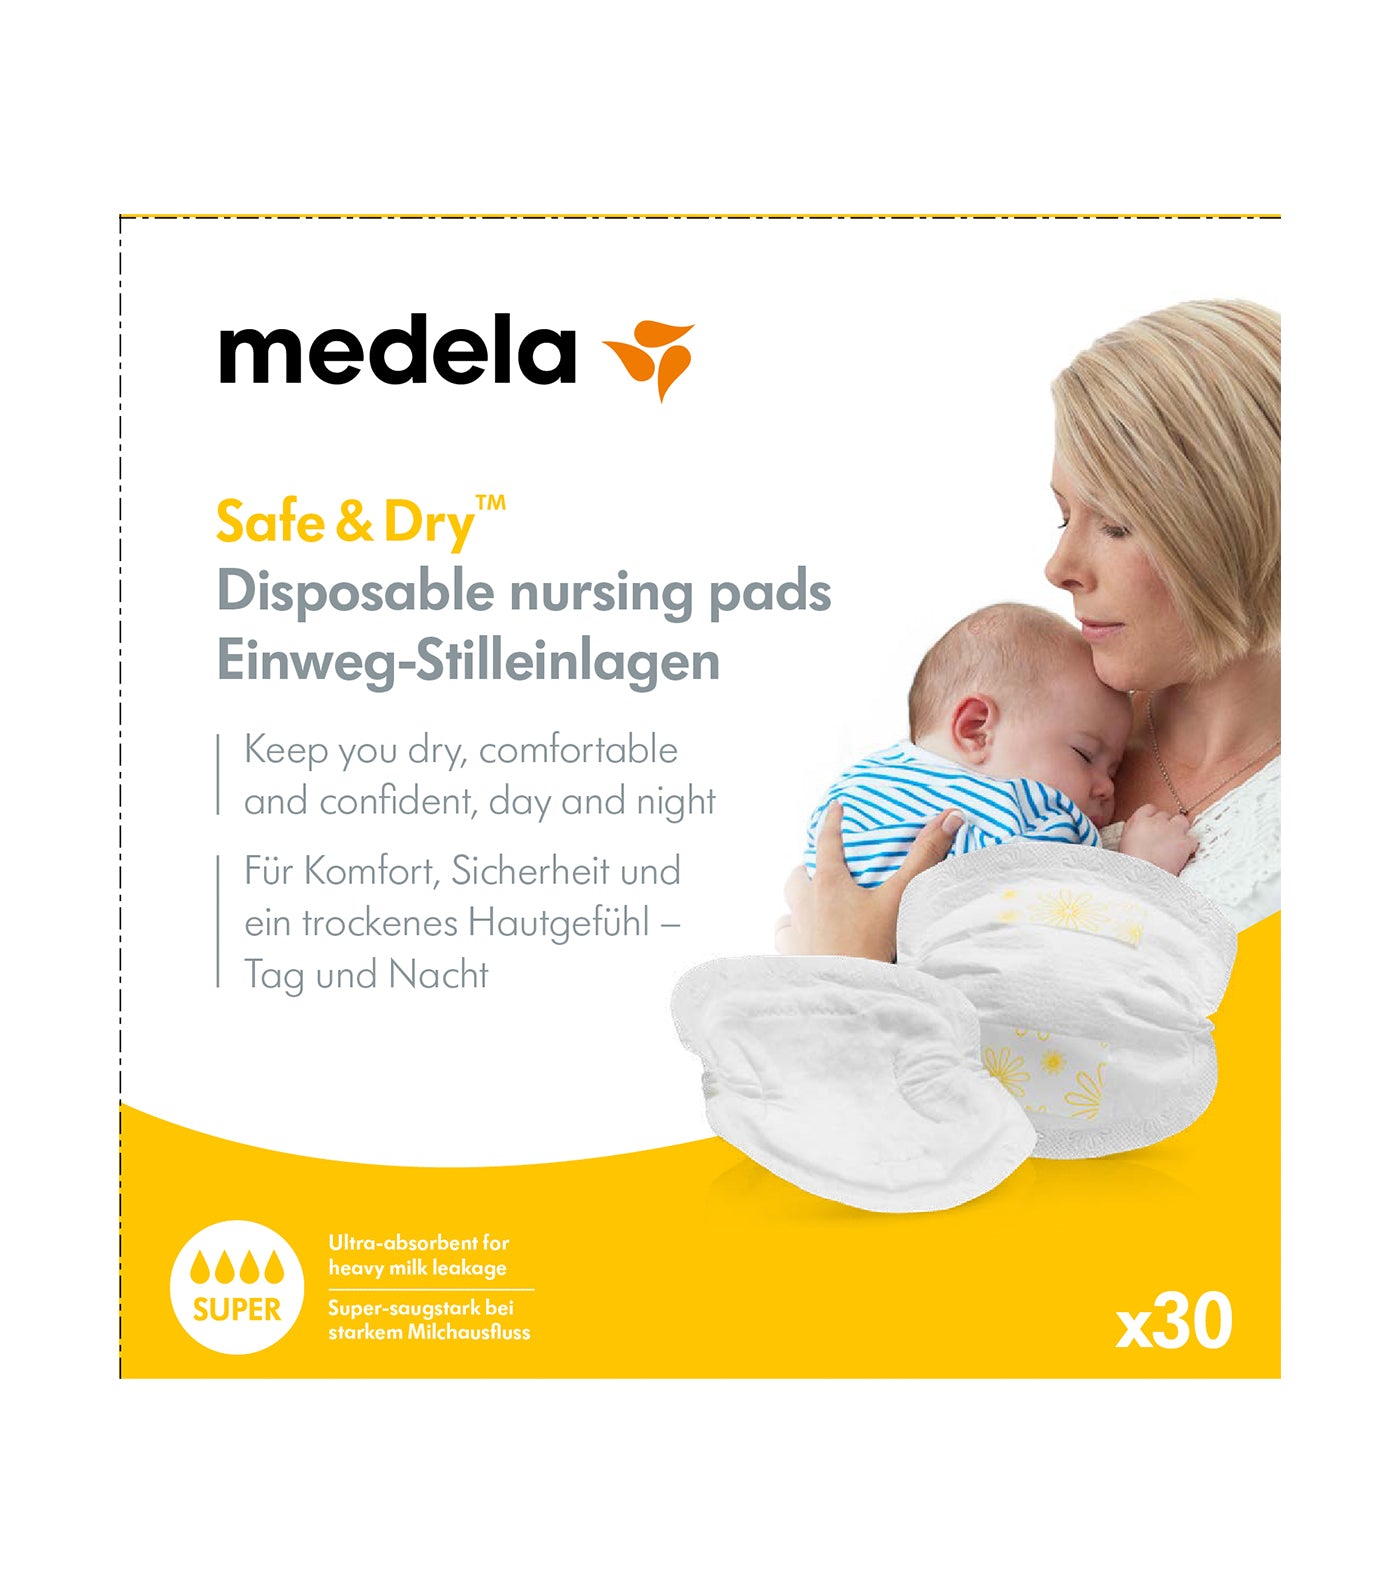 Medela Disposable Nursing Pads - White, 60